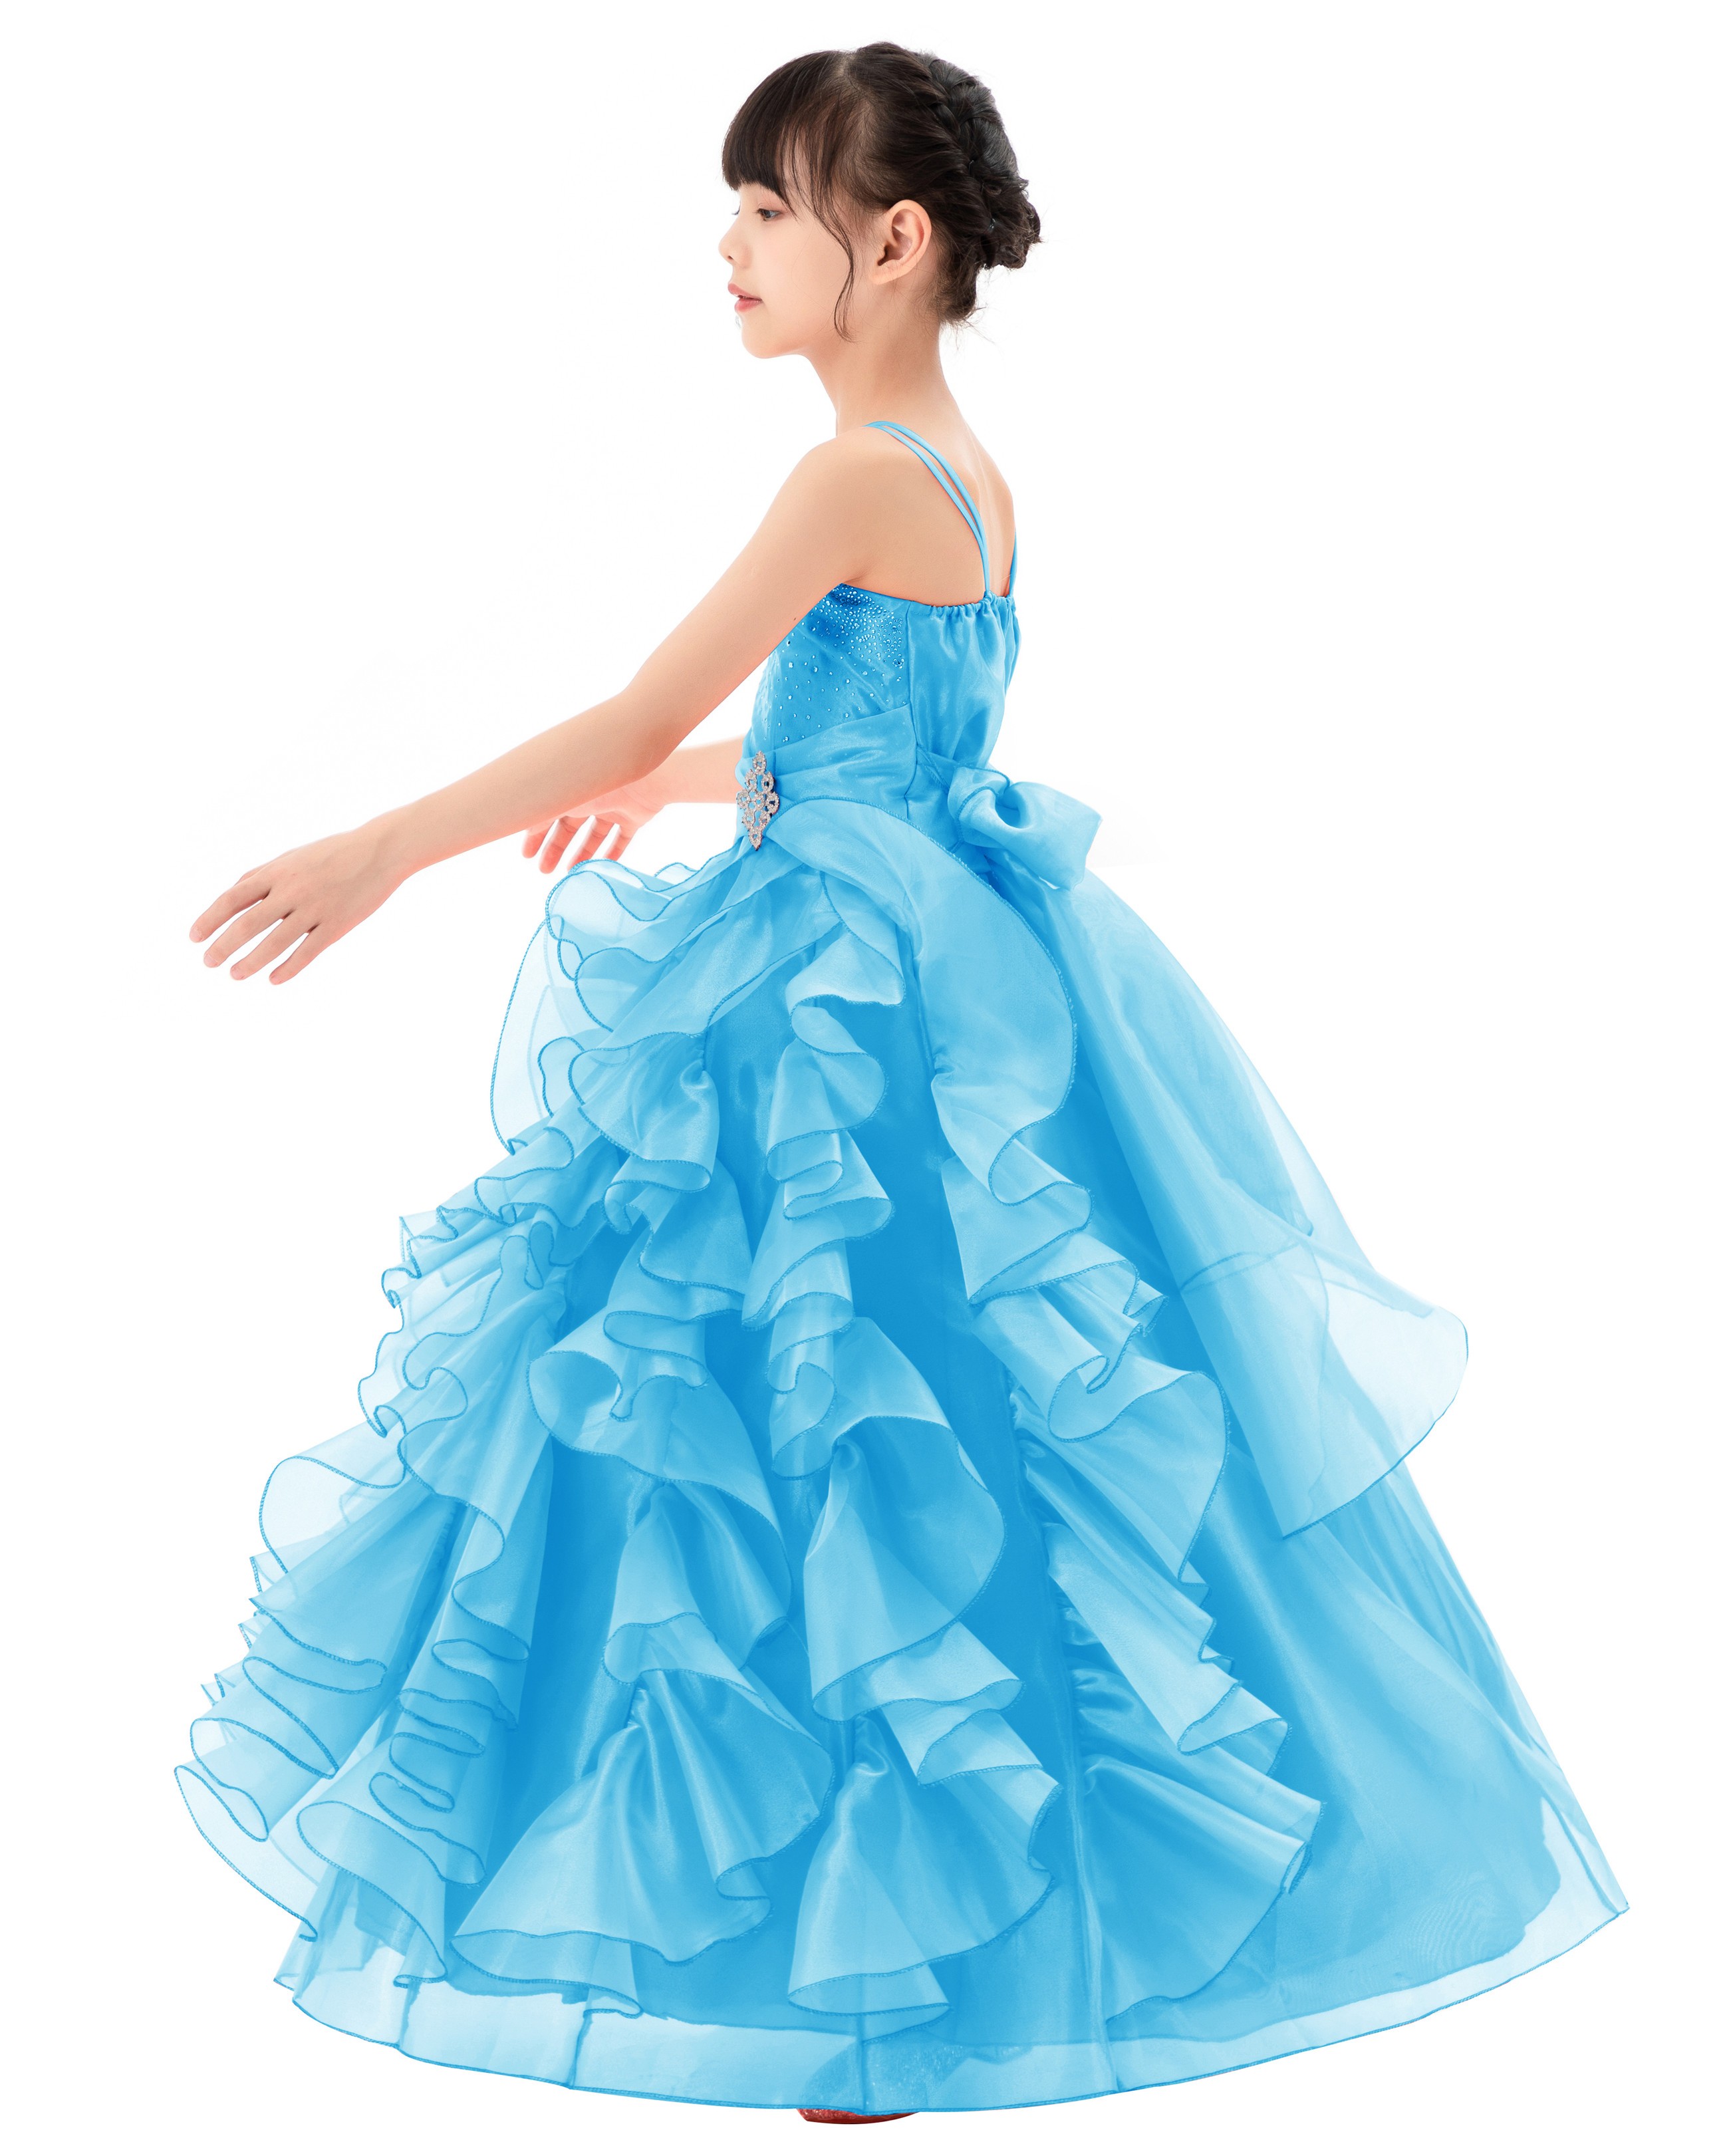 Turquoise Blue Ruffle Organza Overlay Flower Girl Dress Seq5